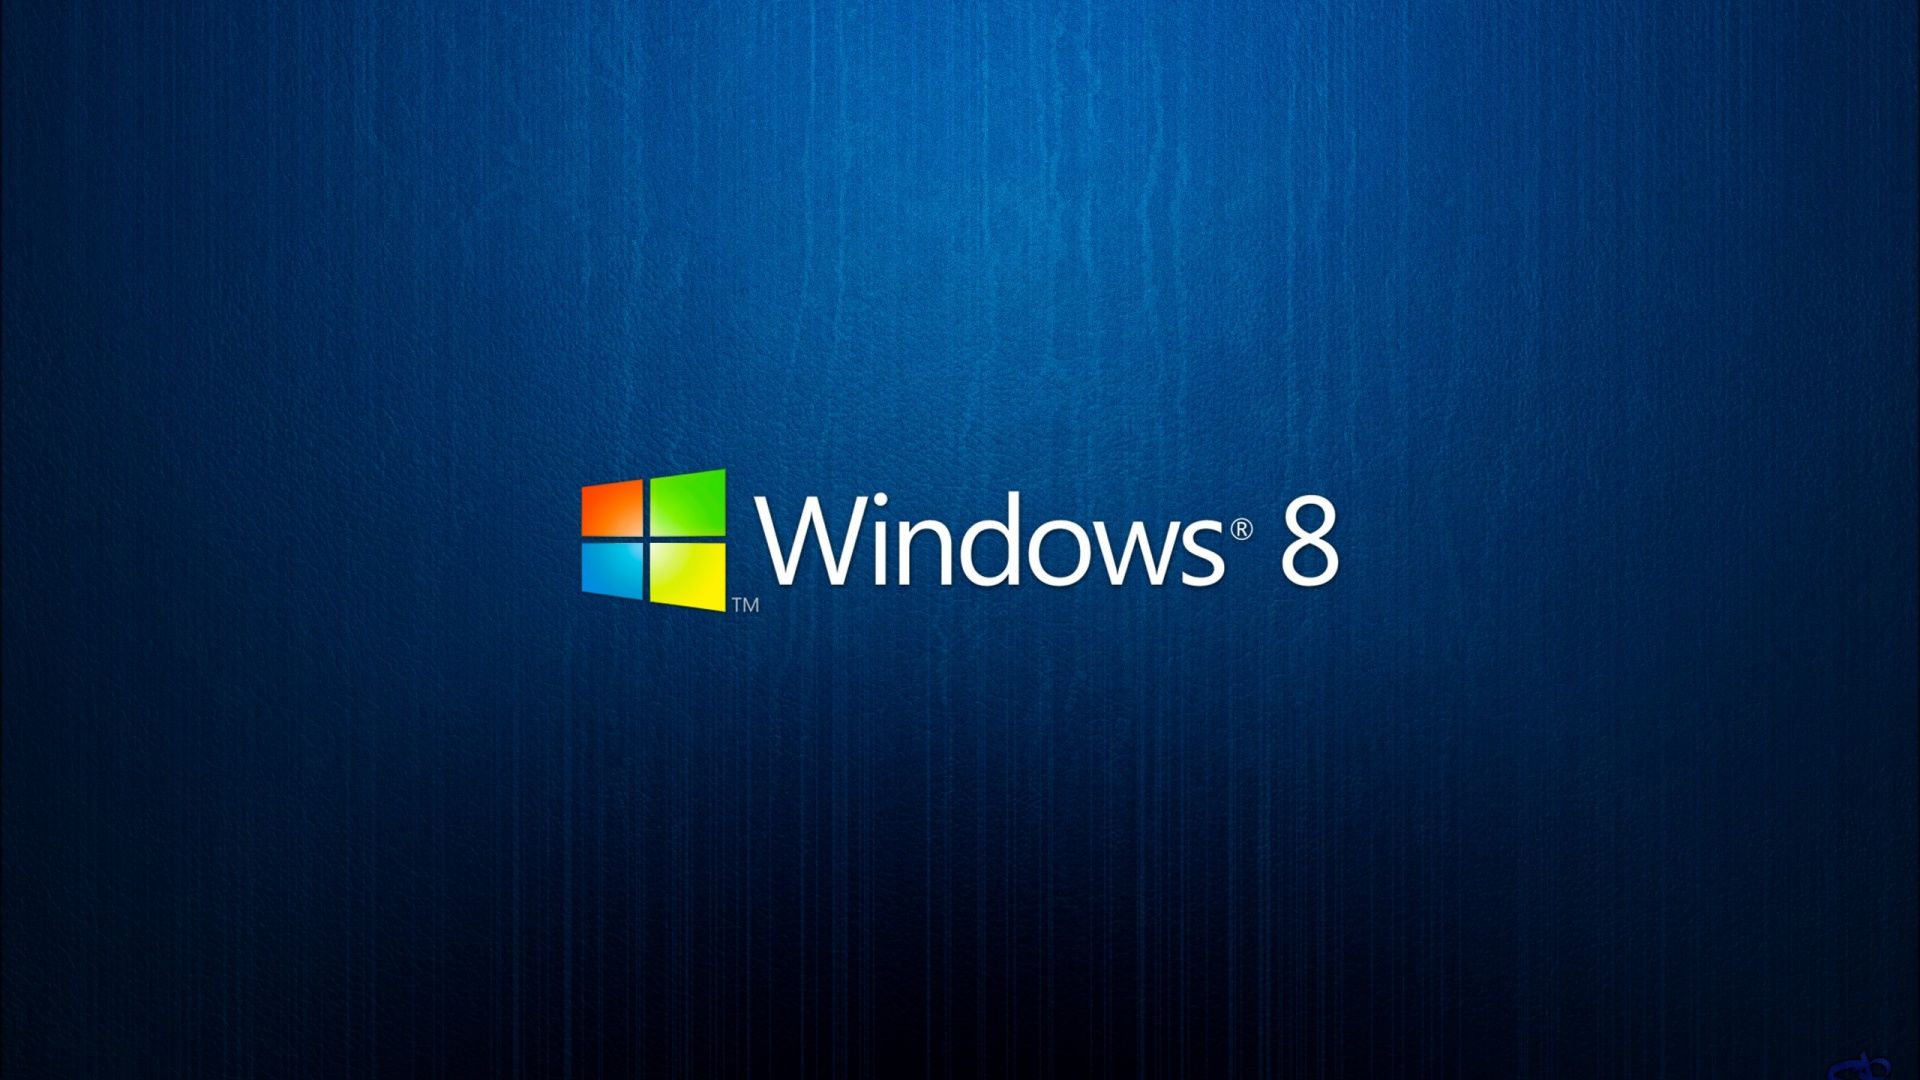 Windows-8-Hd-Wallpaper.jpg